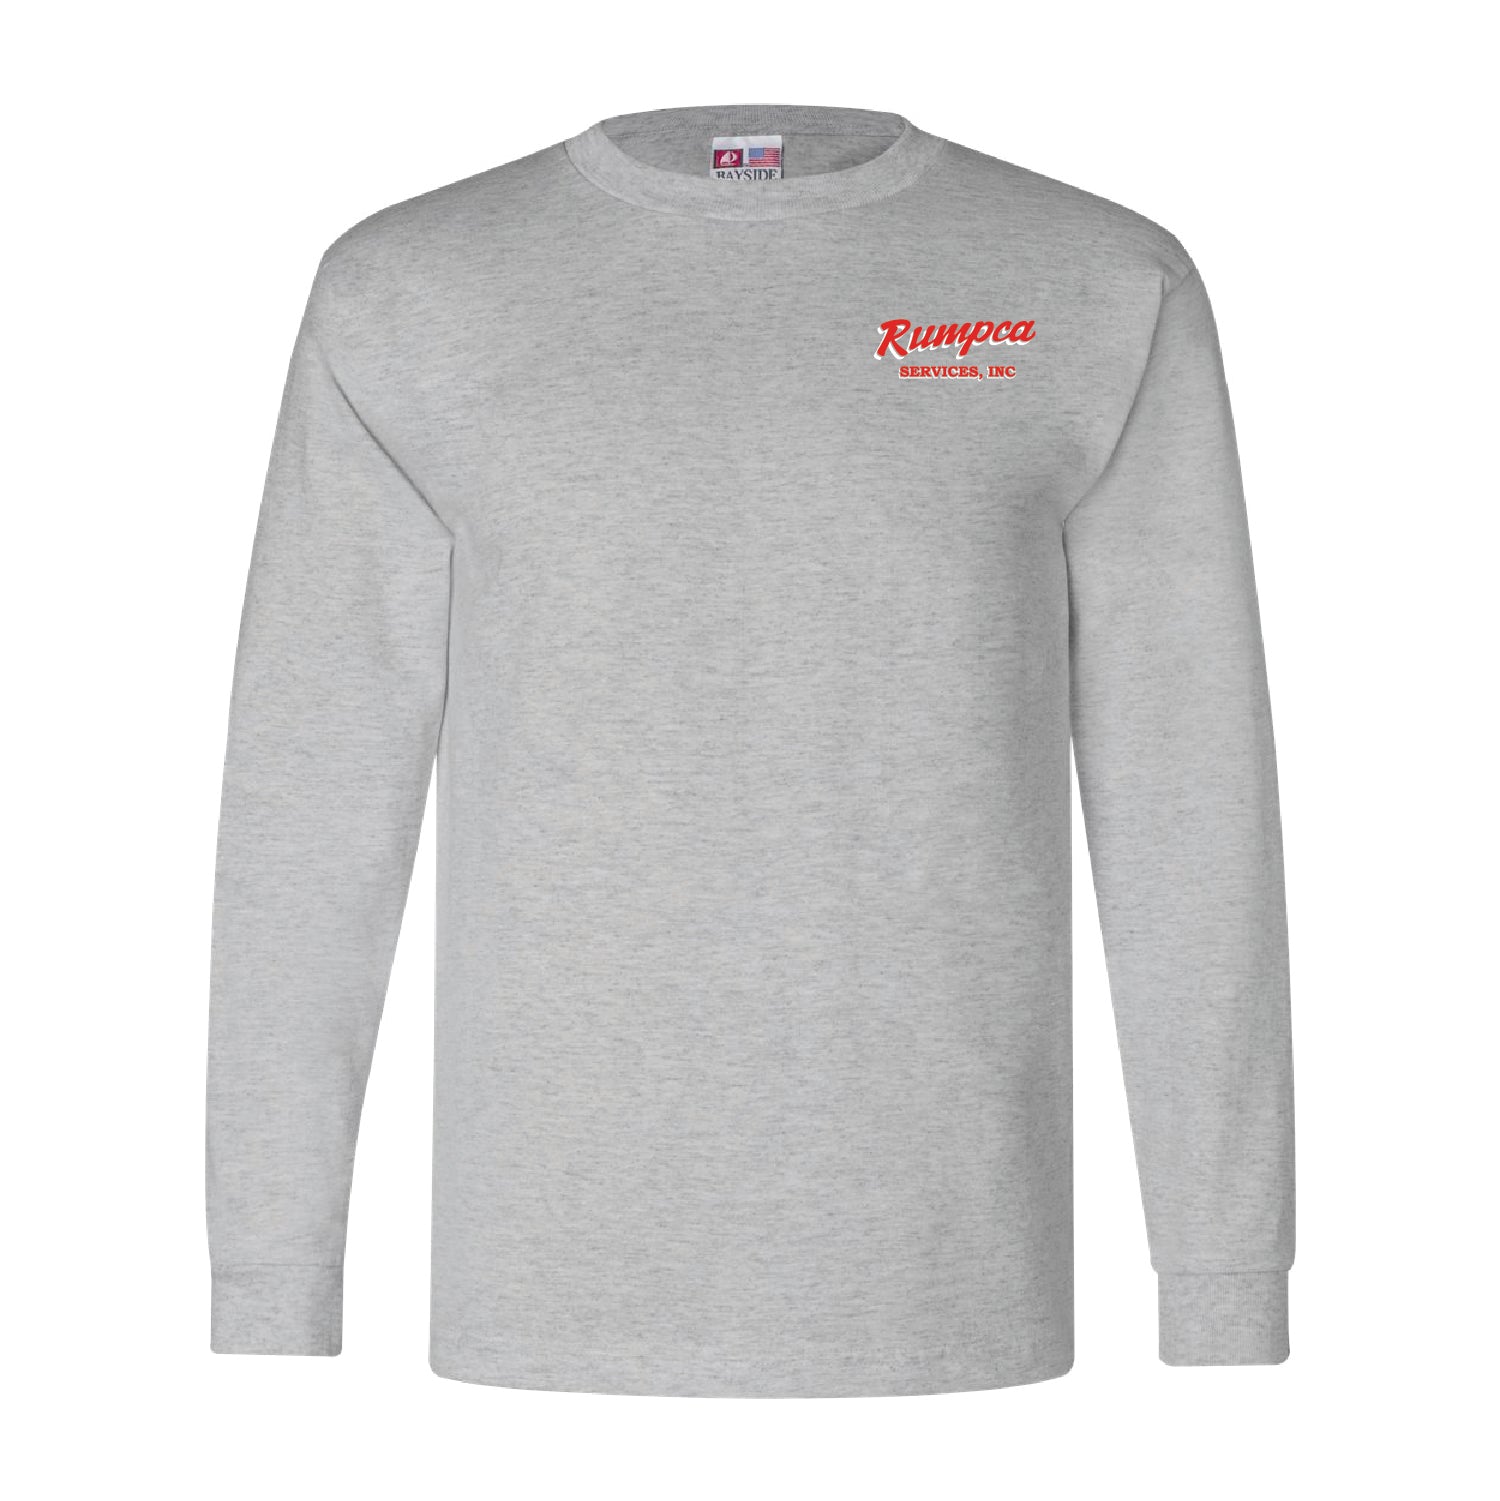 Rumpca Services USA-Made Long Sleeve T-Shirt - DSP On Demand